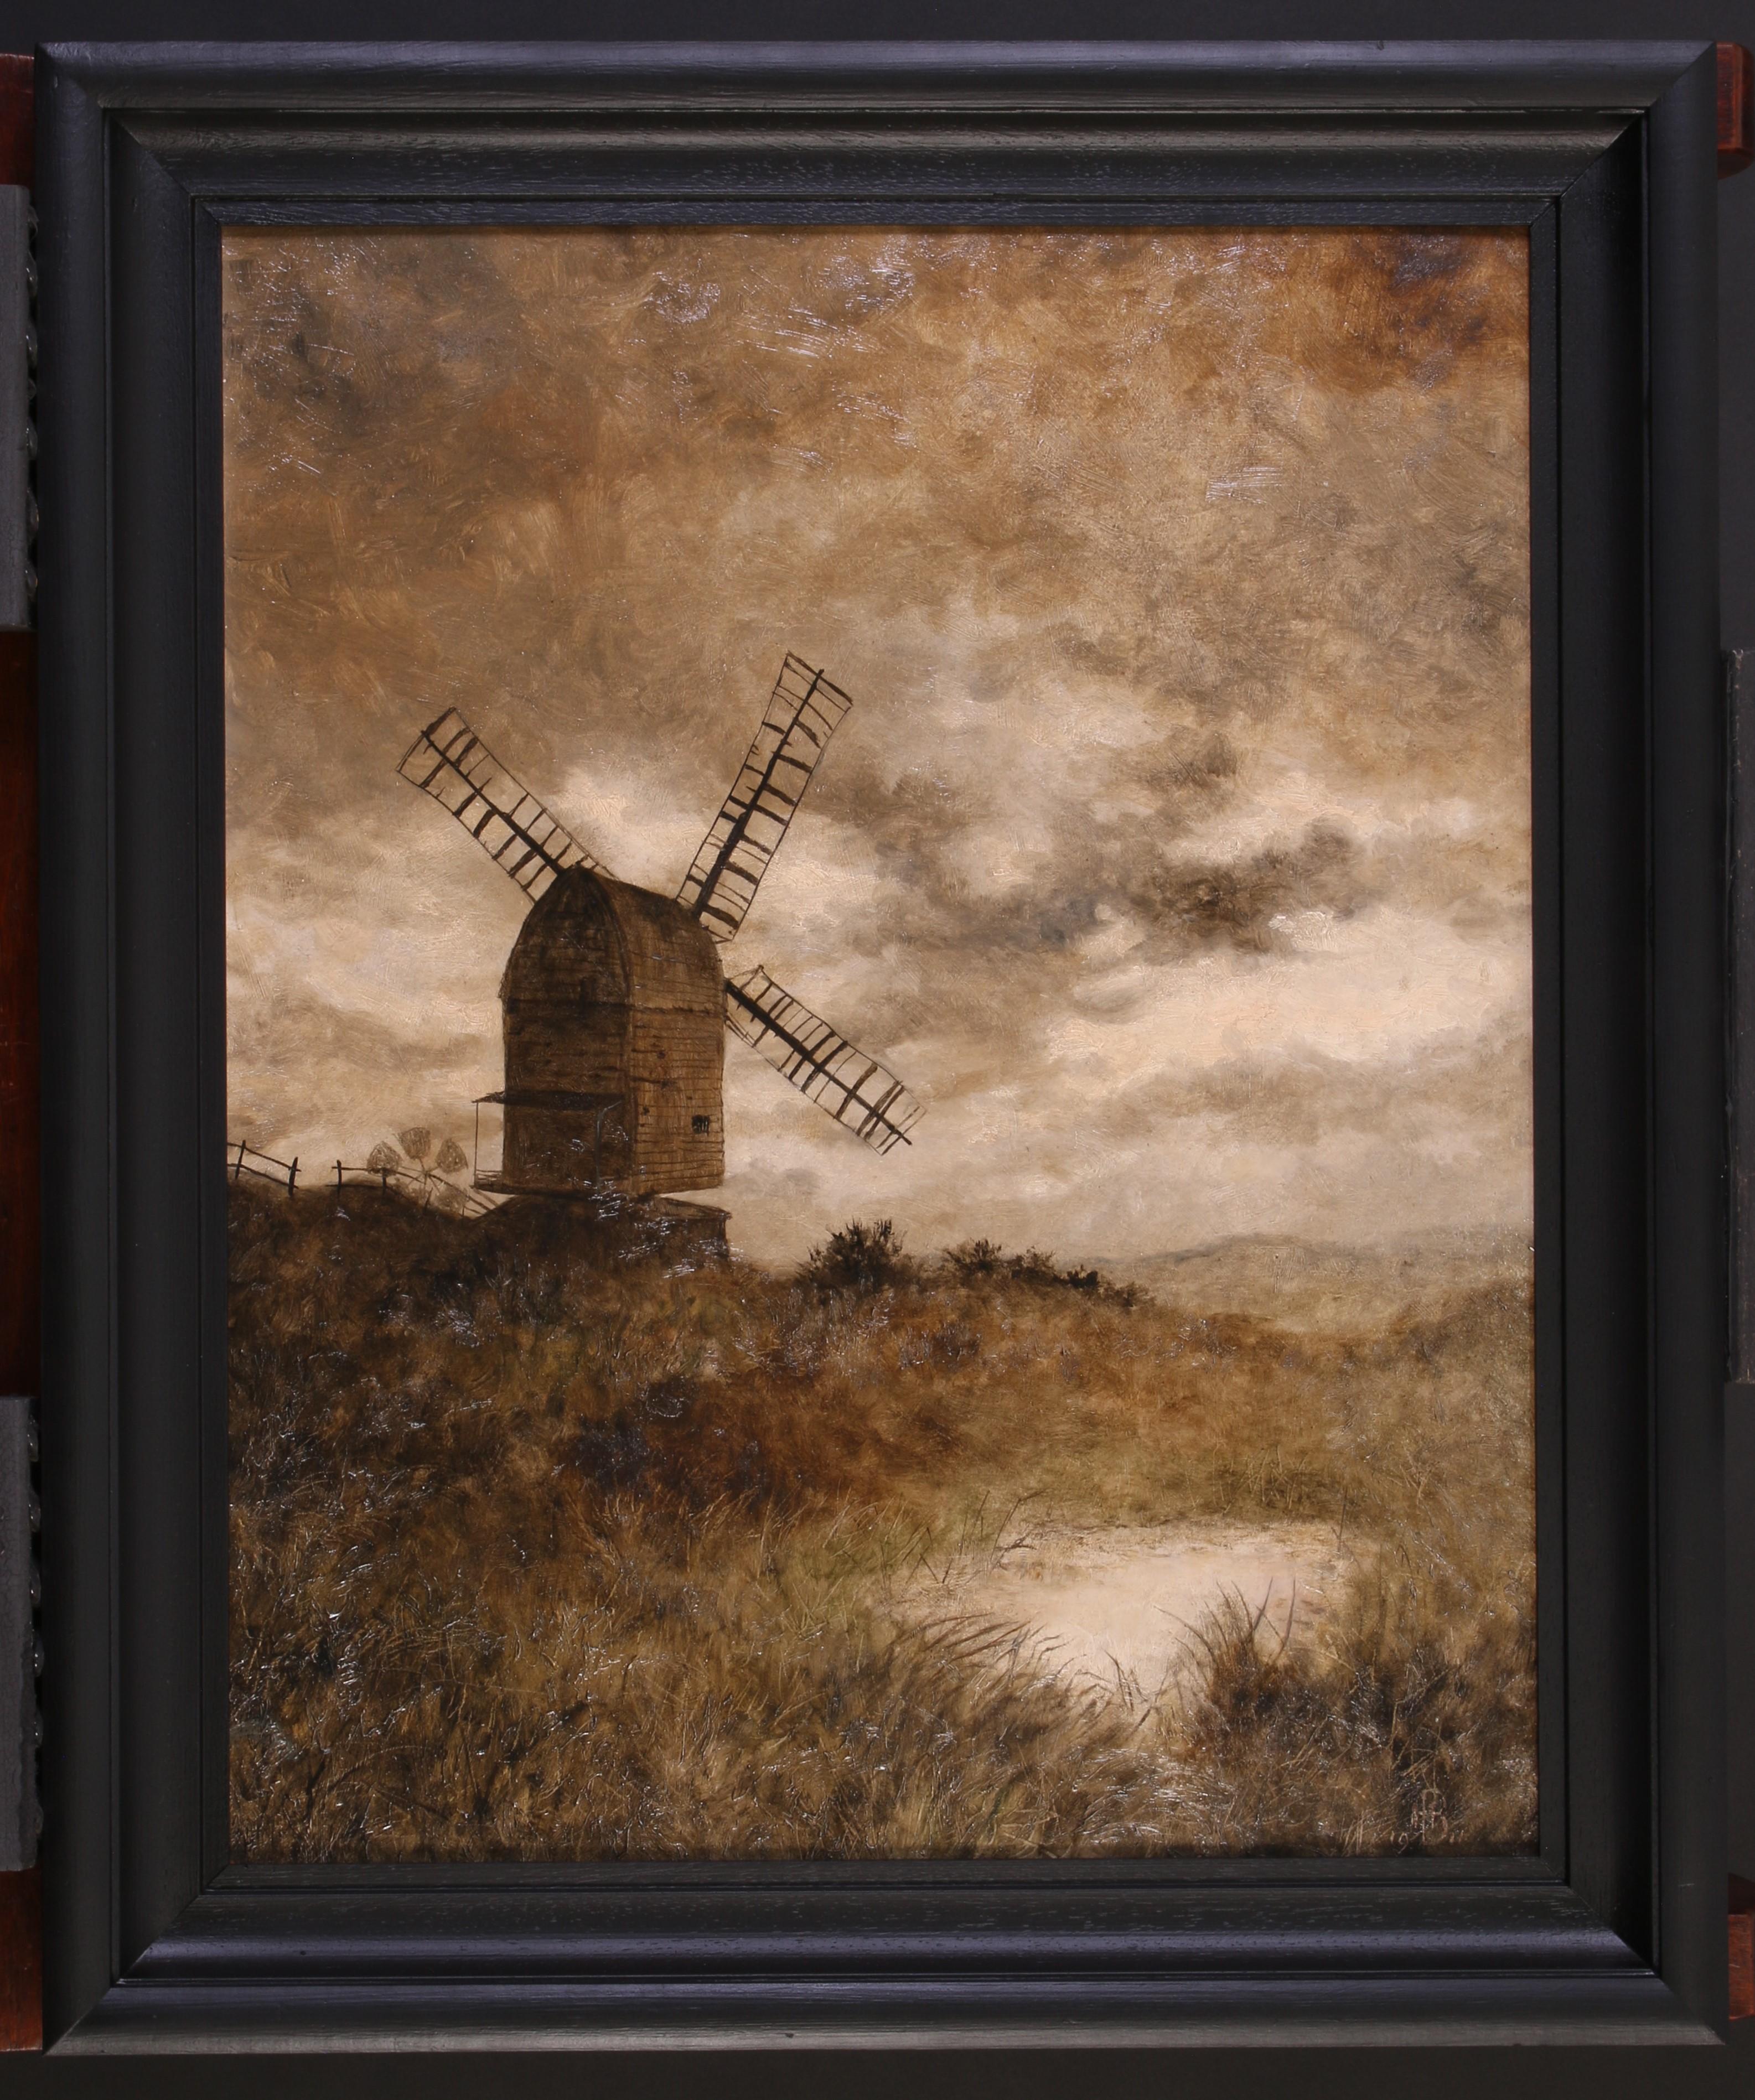 Jill windmill, Hassocks, Sussex - Painting by Harry Bush